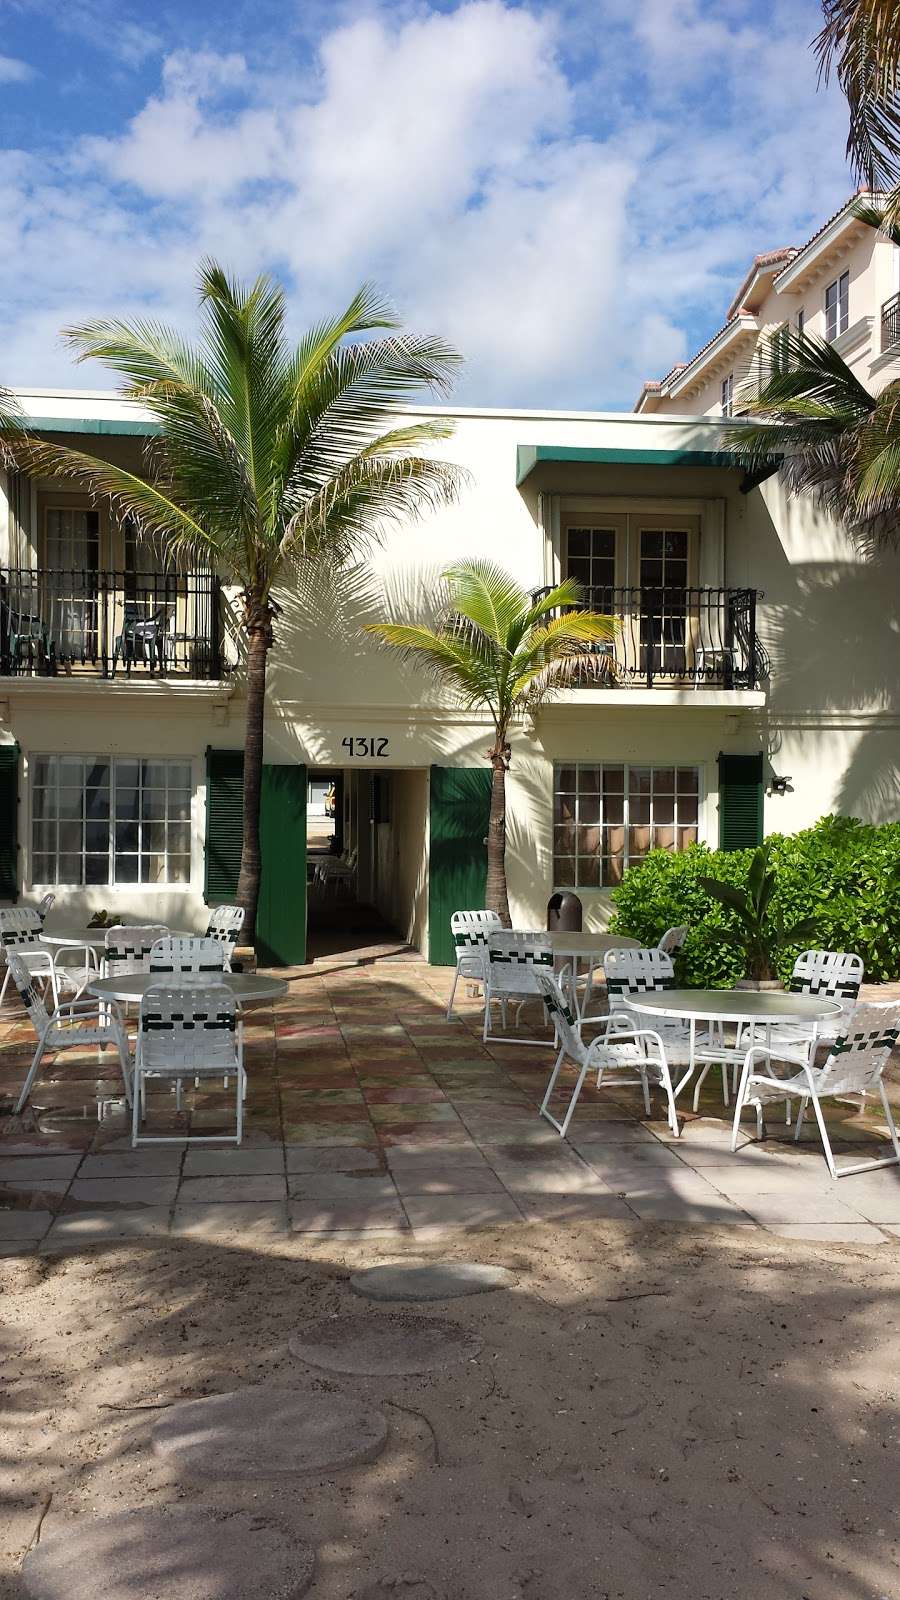 Courtyard Villa Hotel | 4312 El Mar Dr, Lauderdale-By-The-Sea, FL 33308 | Phone: (954) 489-9870